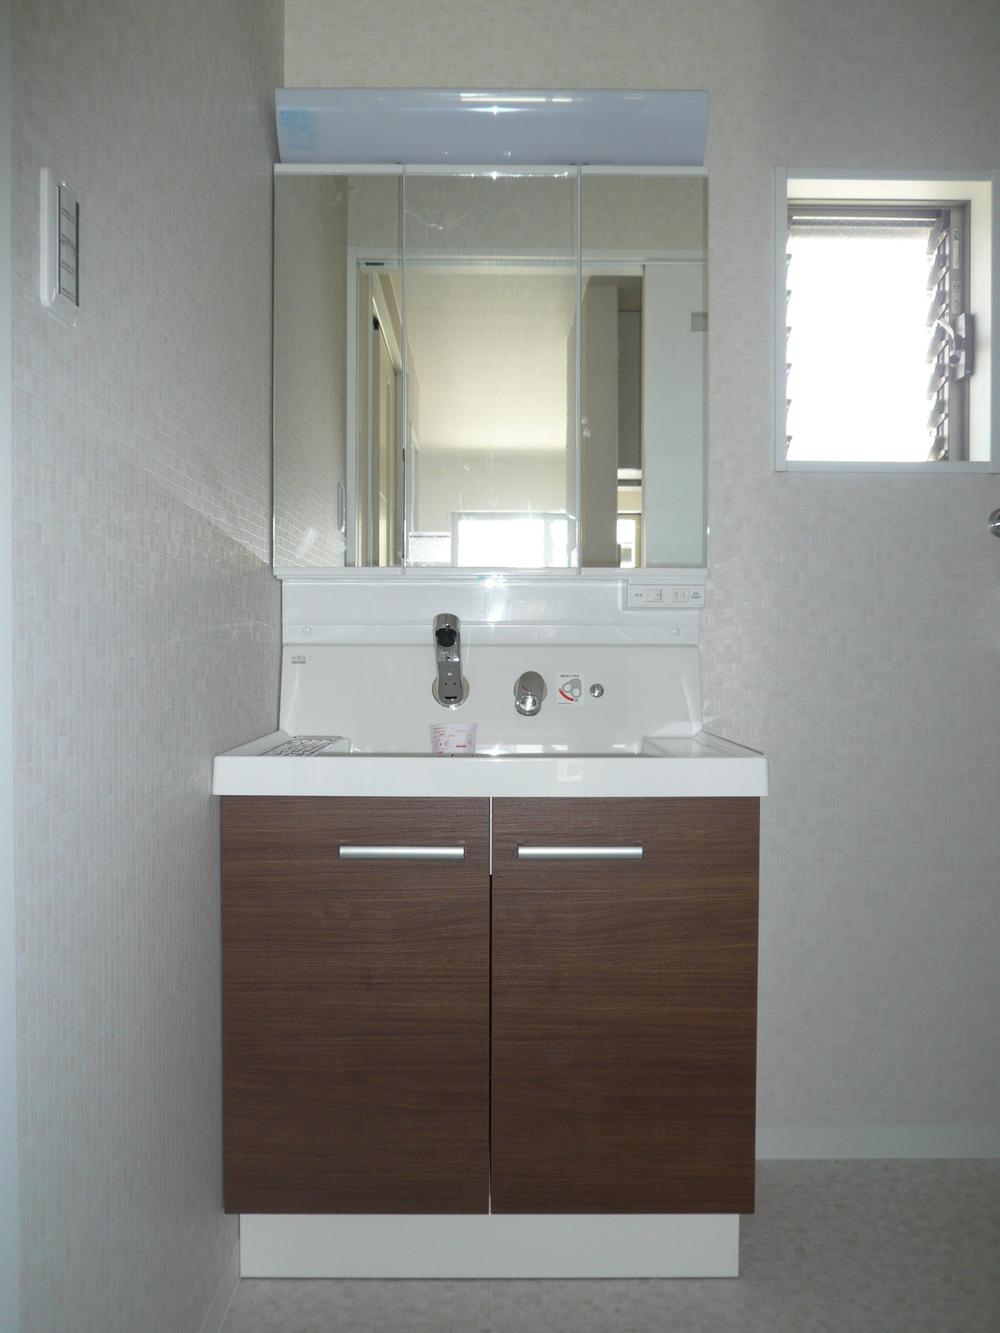 Wash basin, toilet. Same specification standard vanity LIXIL Piara Frontage 750mm